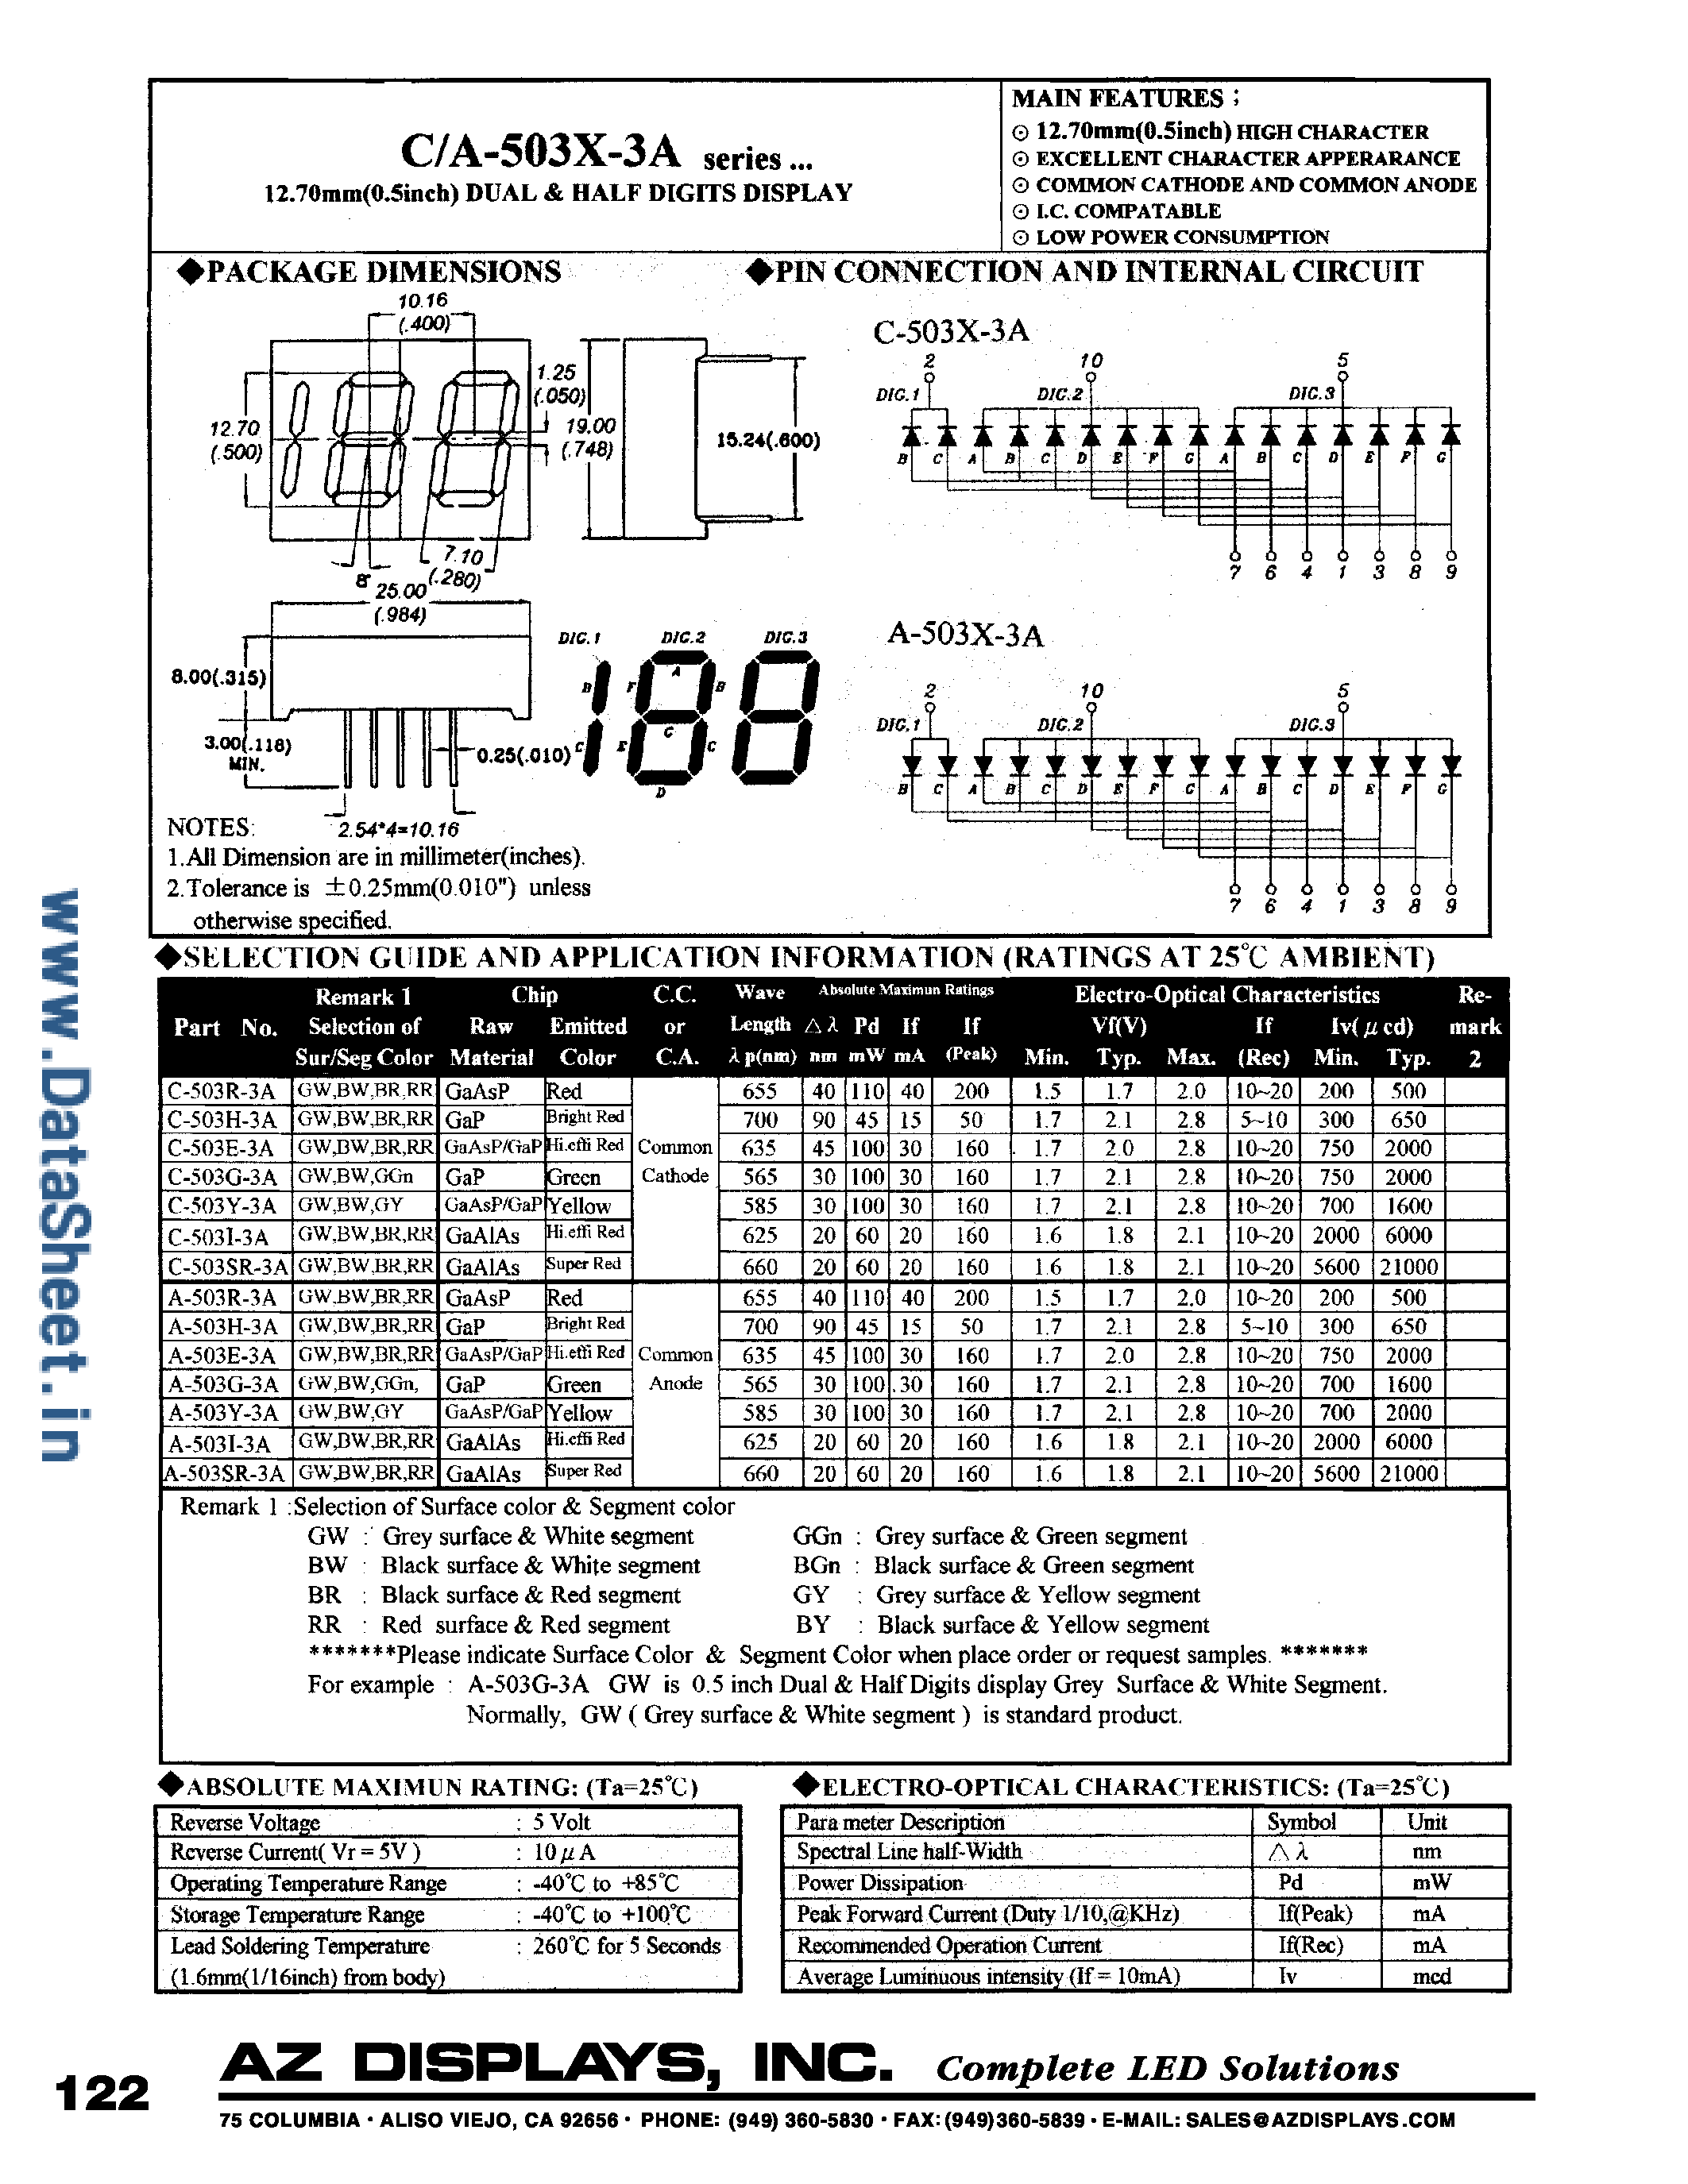 Datasheet A-503E-3A - (A-503x-3A) Dual & Half Digital Display page 1